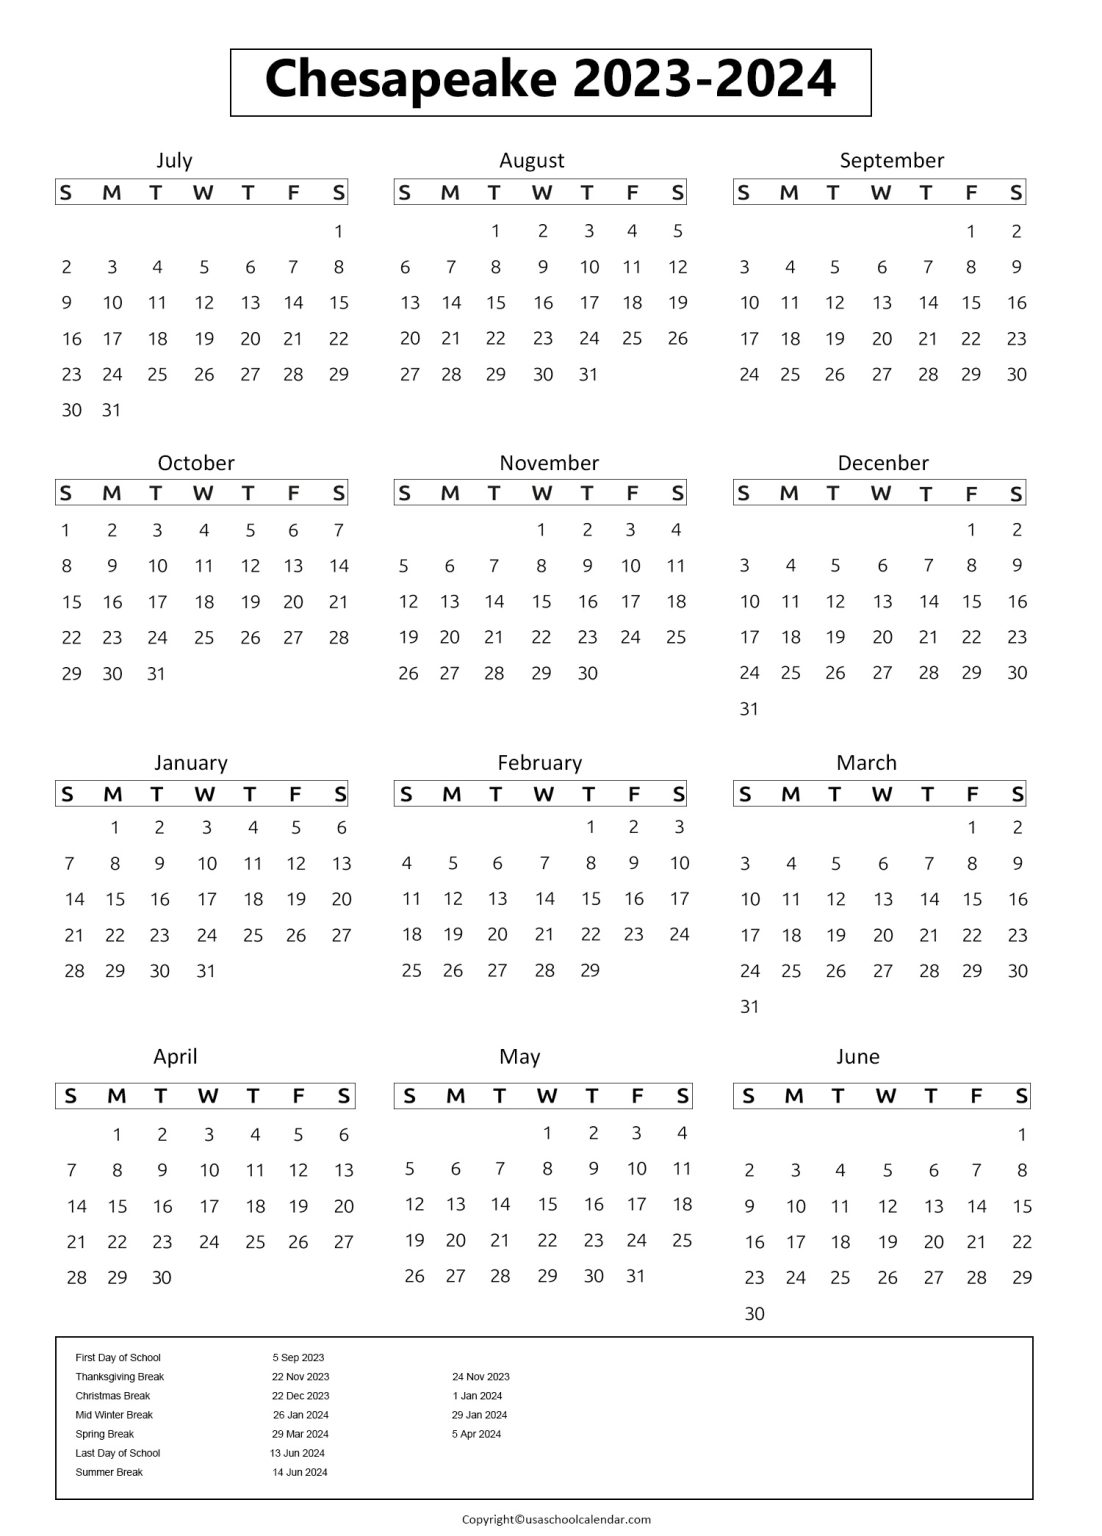 Chesapeake Public Schools Calendar Holidays 2023 2024